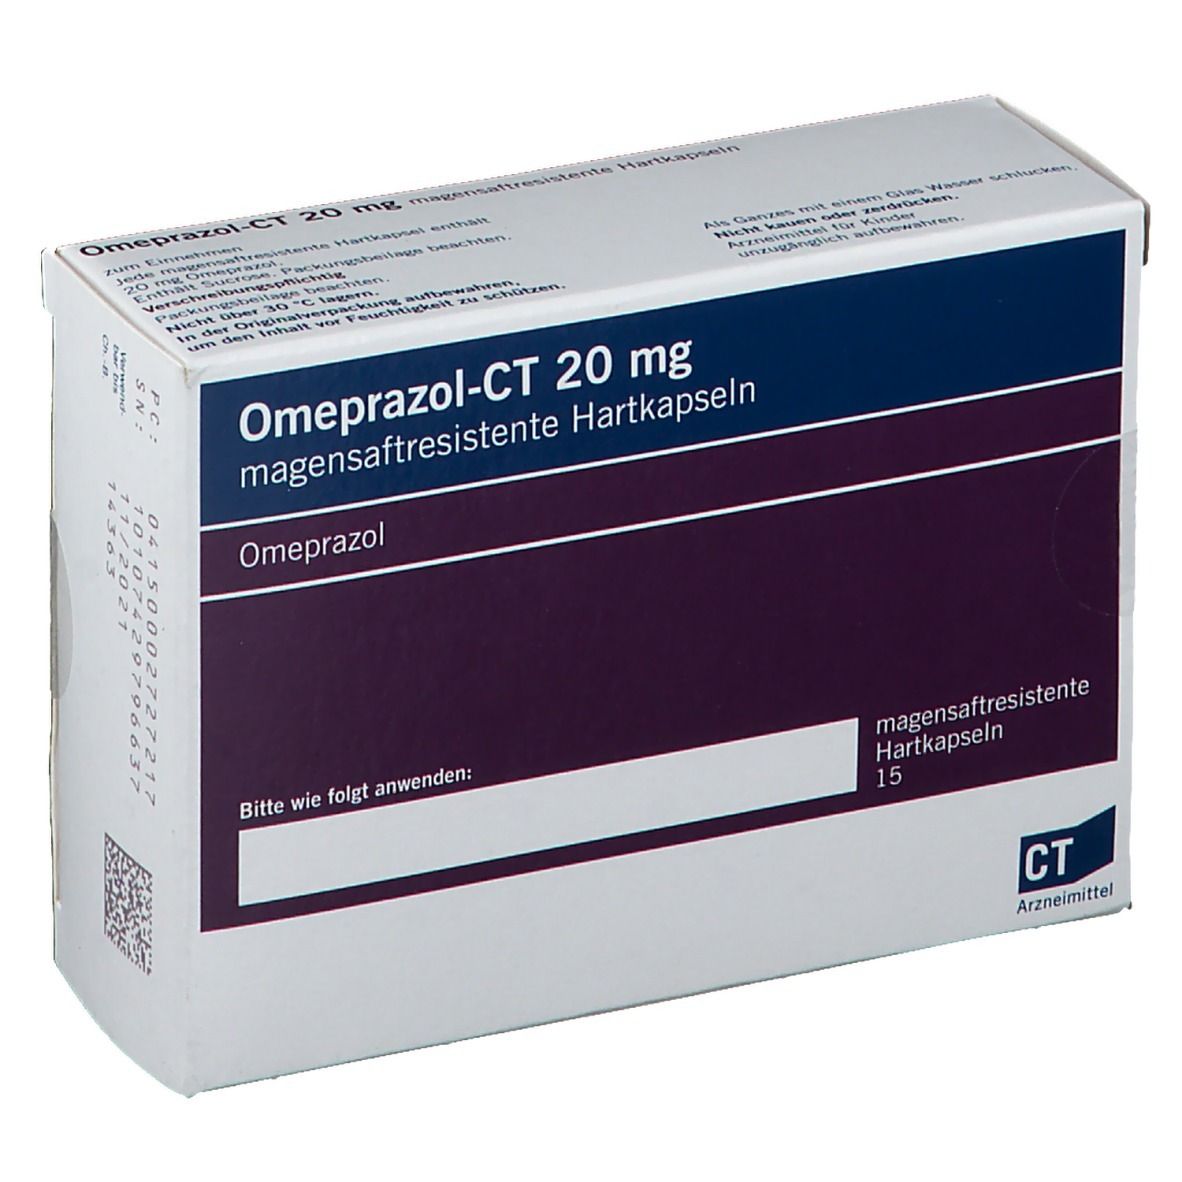 Omeprazol-CT 20 mg